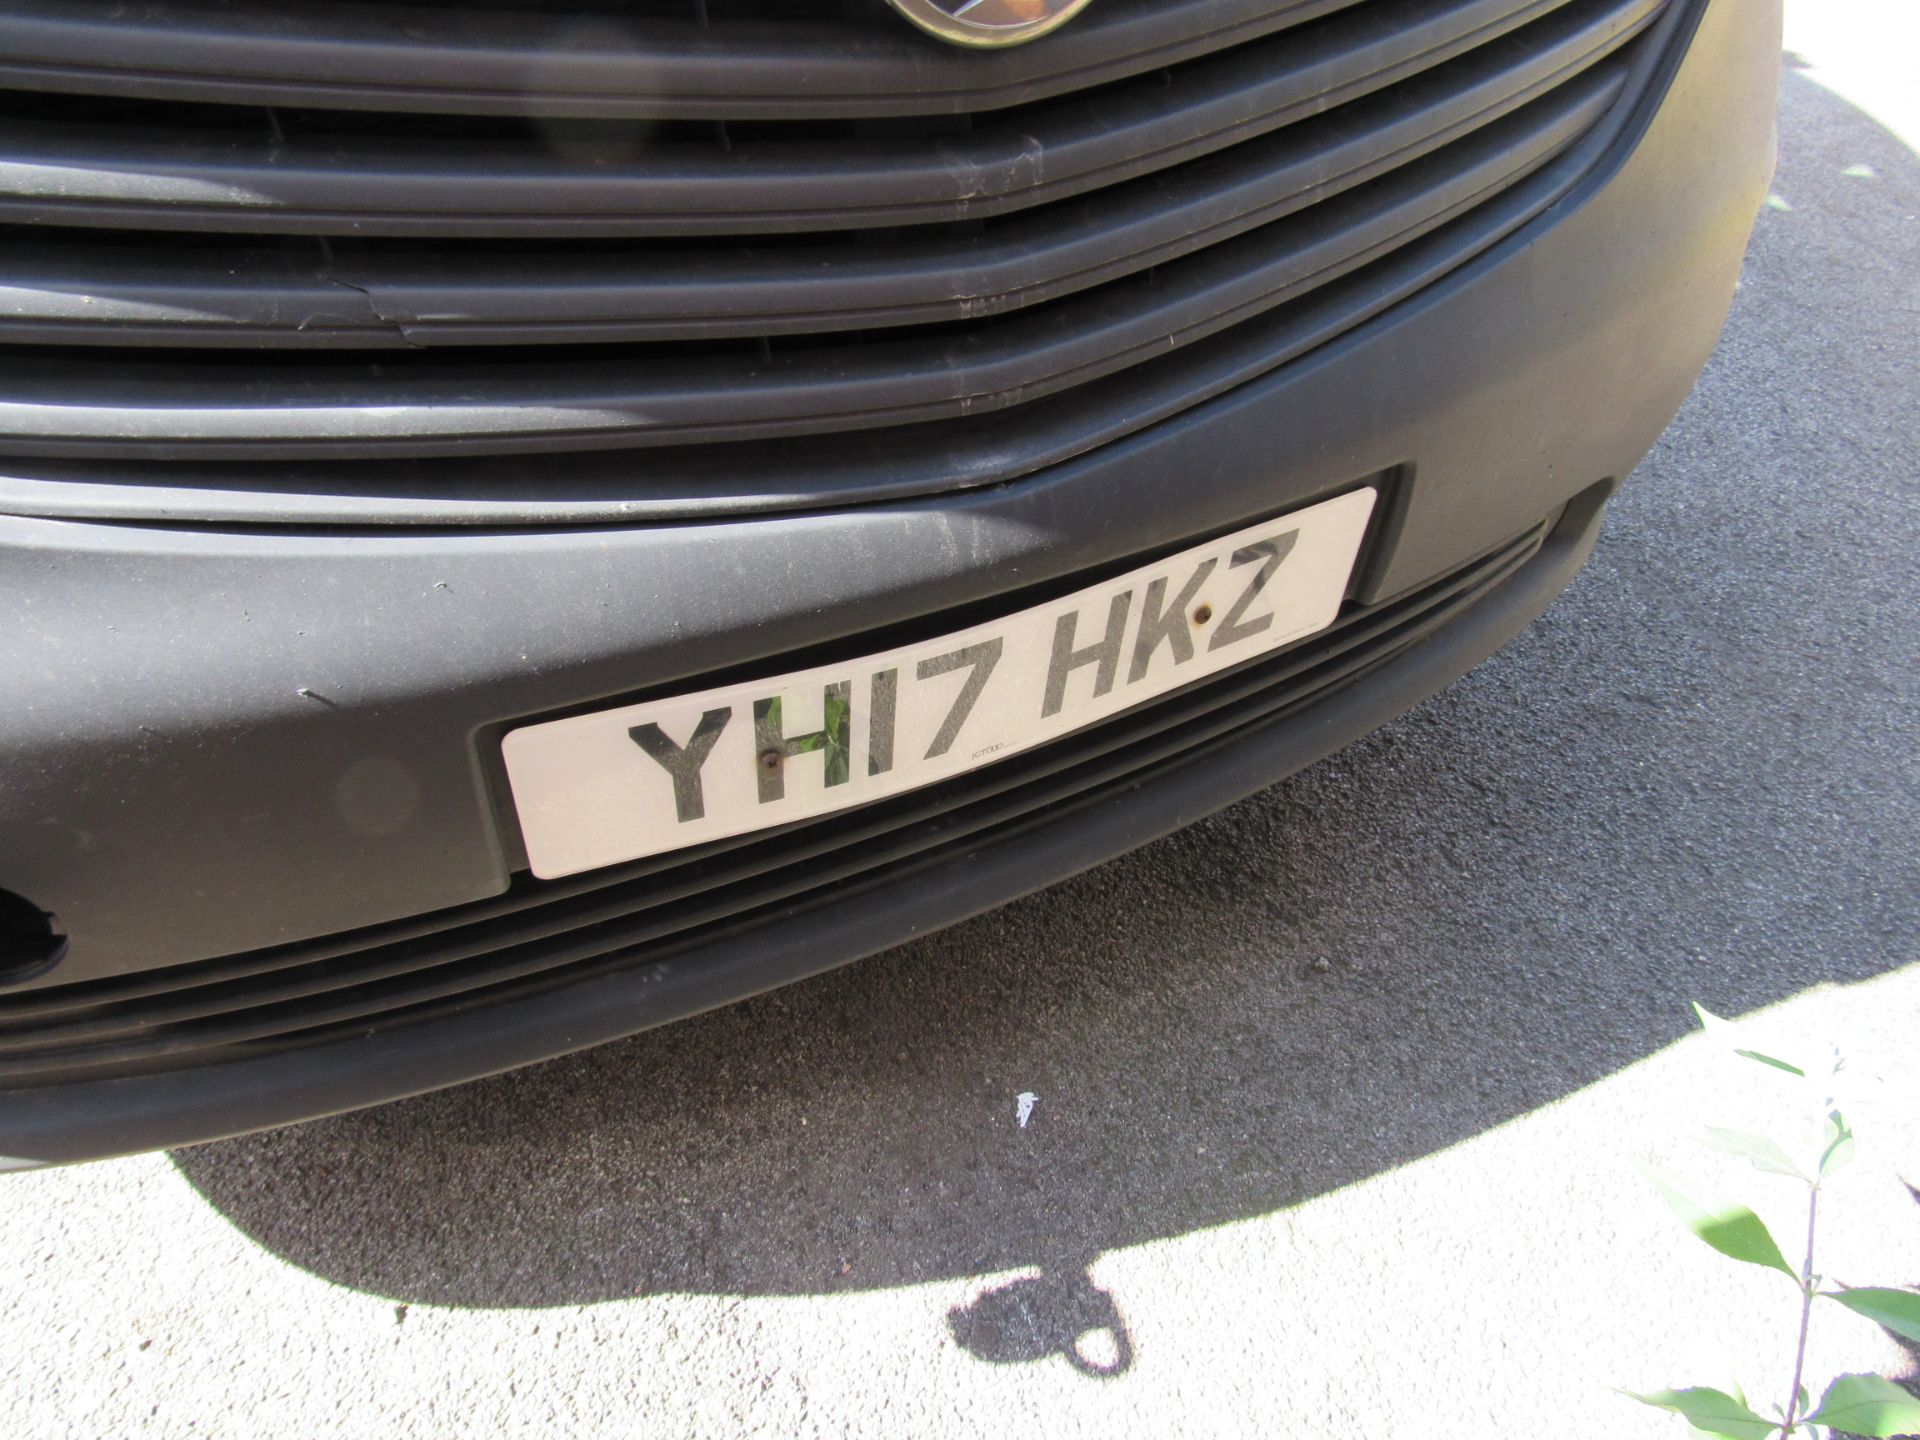 Vauxhall Vivaro van YH17 HKZ, Mileage unknown, non runner, Diesel, First Registered March 2017, - Image 7 of 7